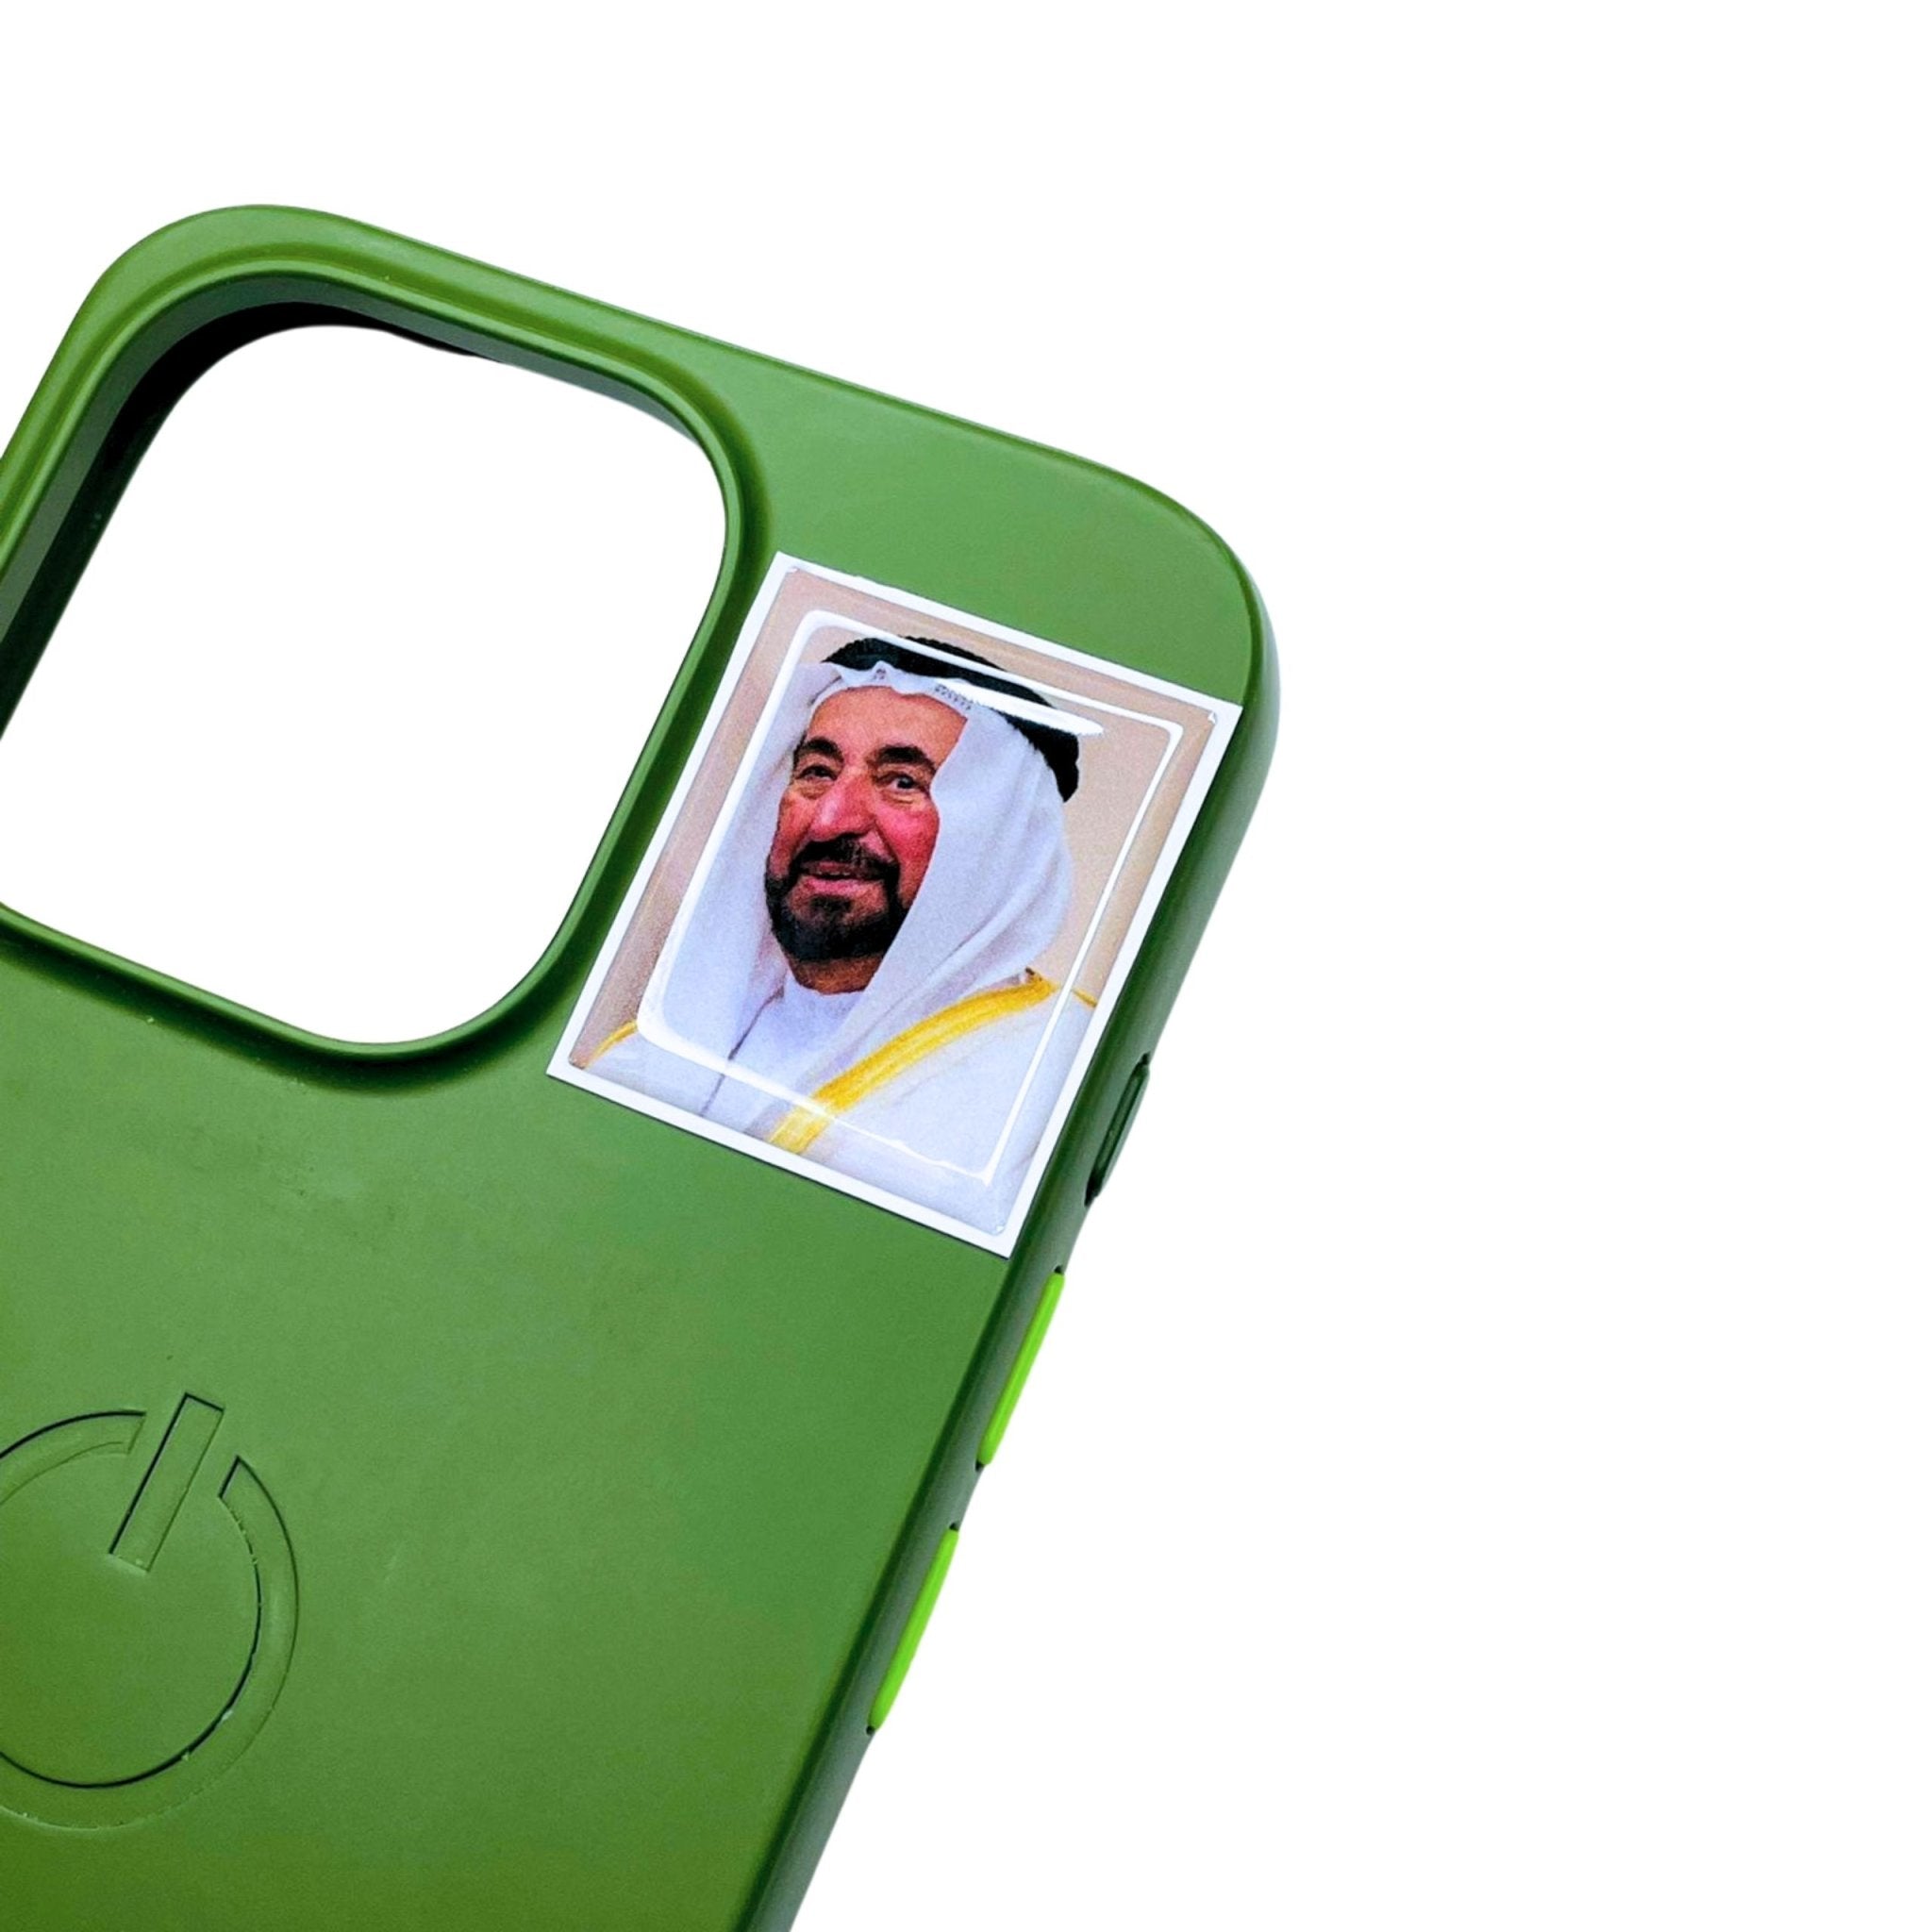 Sticker Shaikh Sultan bin Mohamed Al-Qasimi - 2